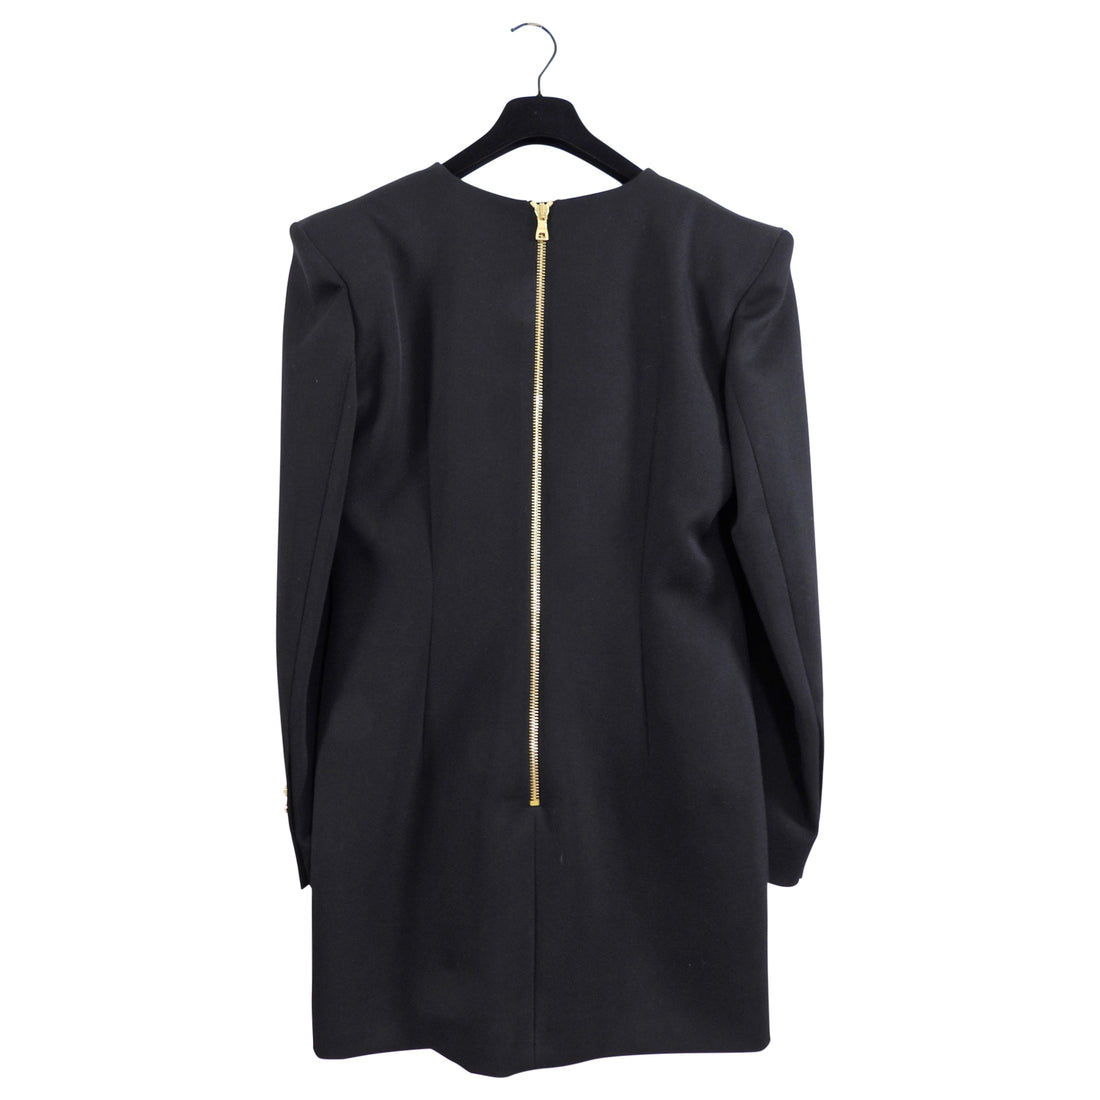 Balmain Black Wool Cache-Coeur Blazer Dress with Gold Buttons - USA 12